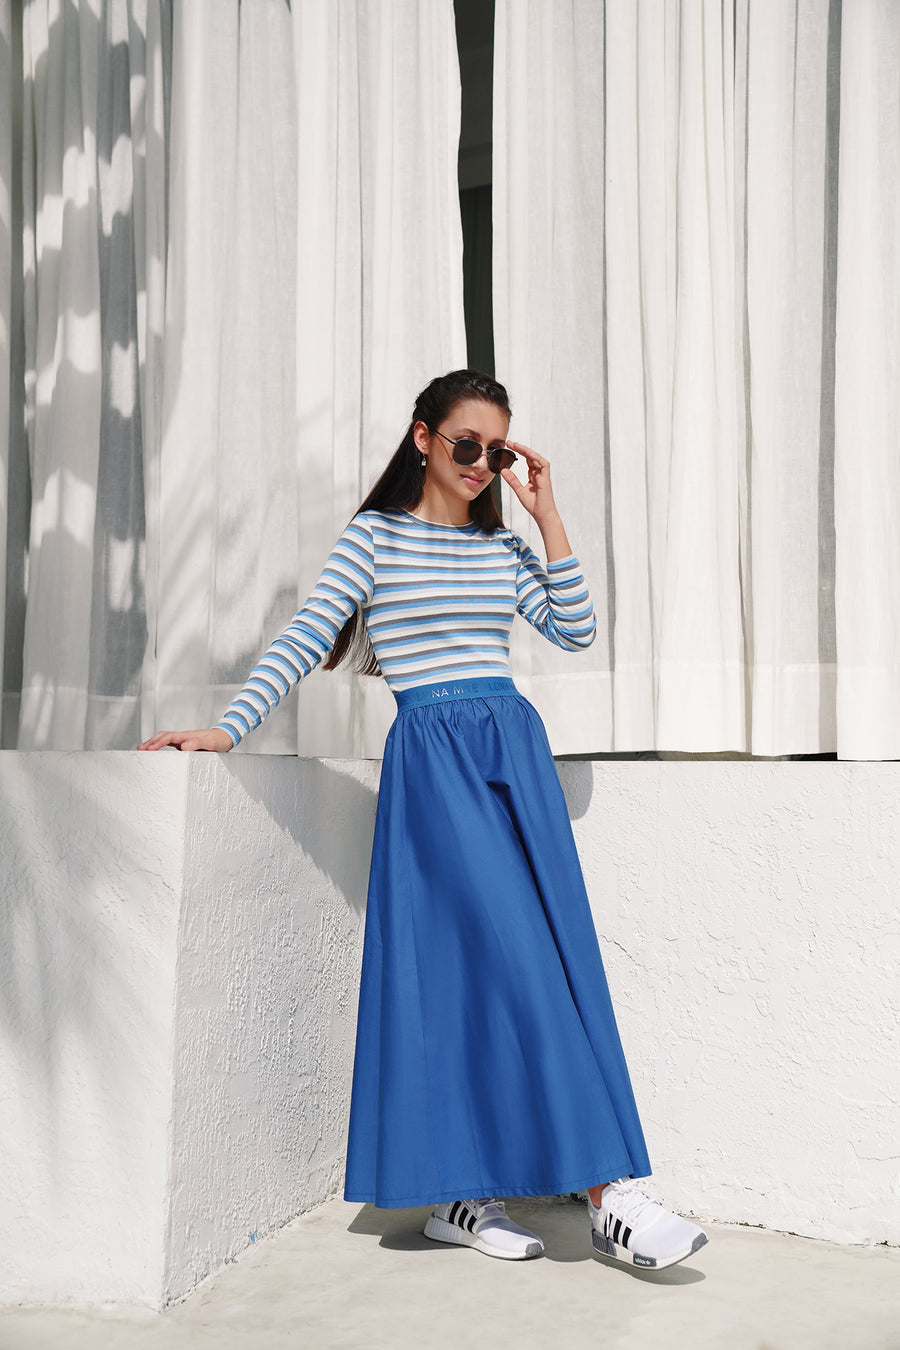 Evie denim blue skirt by Luna Mae